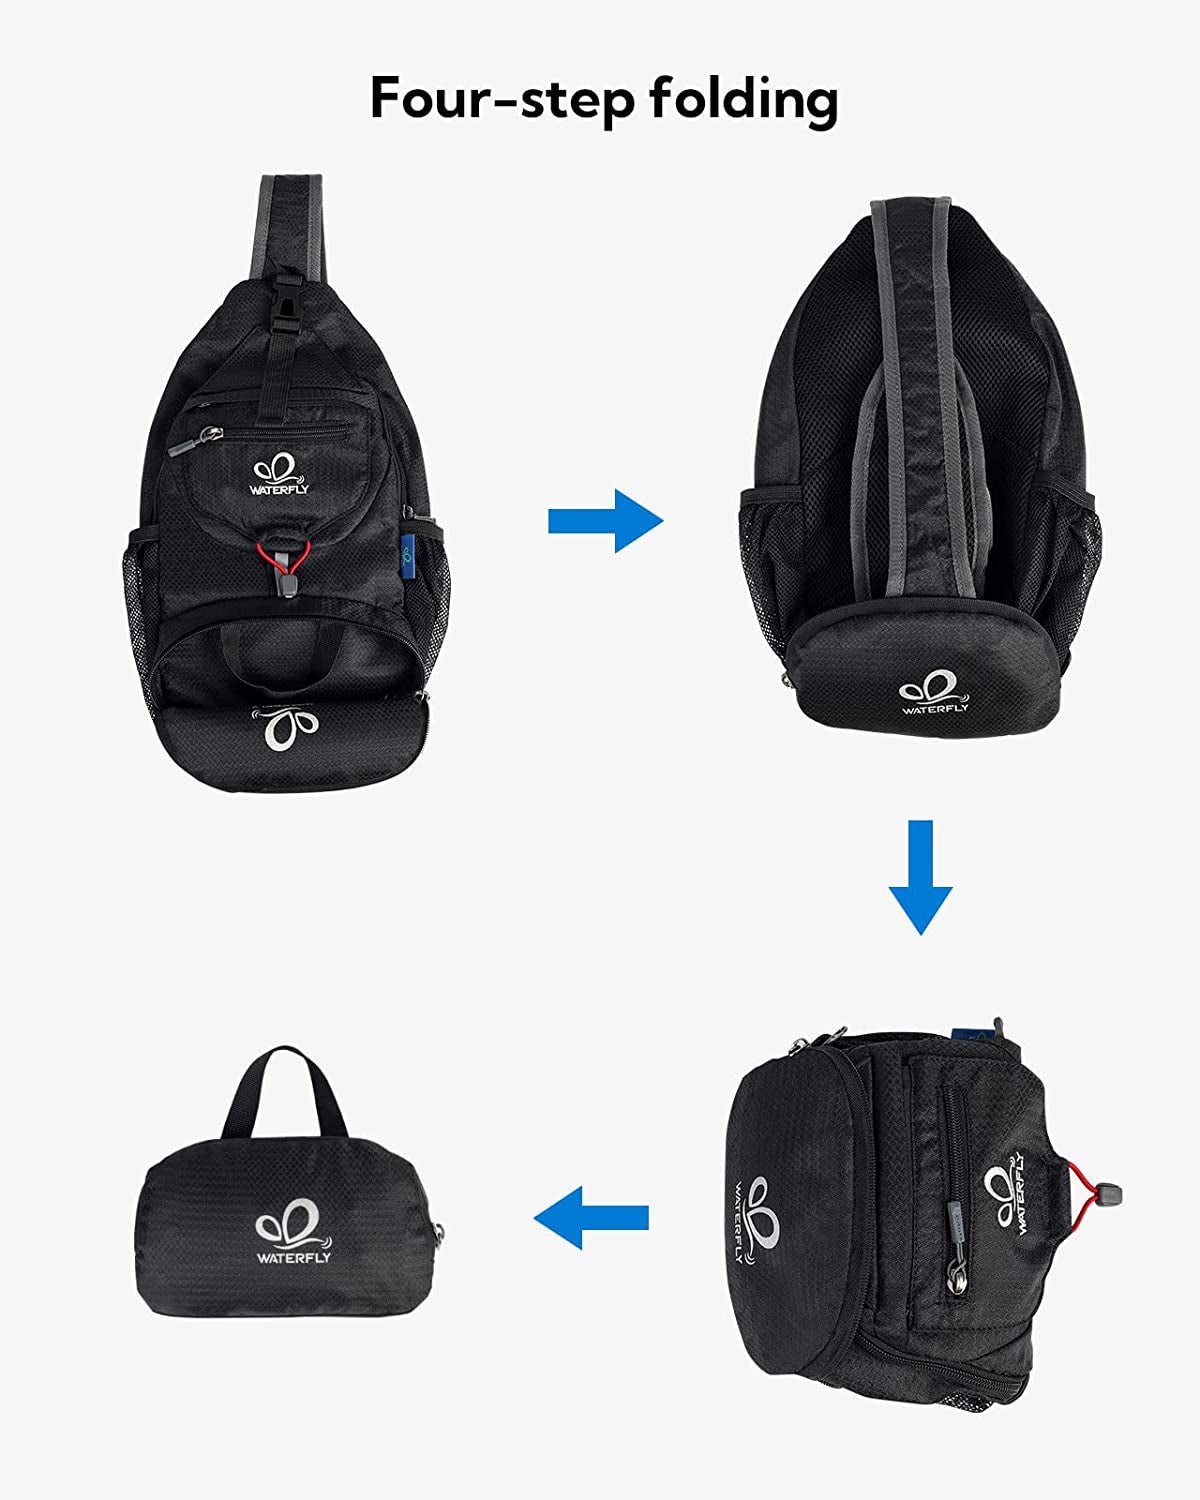 Packable Small Crossbody Sling Backpack Shoulder Chest Bag Daypack for Hiking Traveling